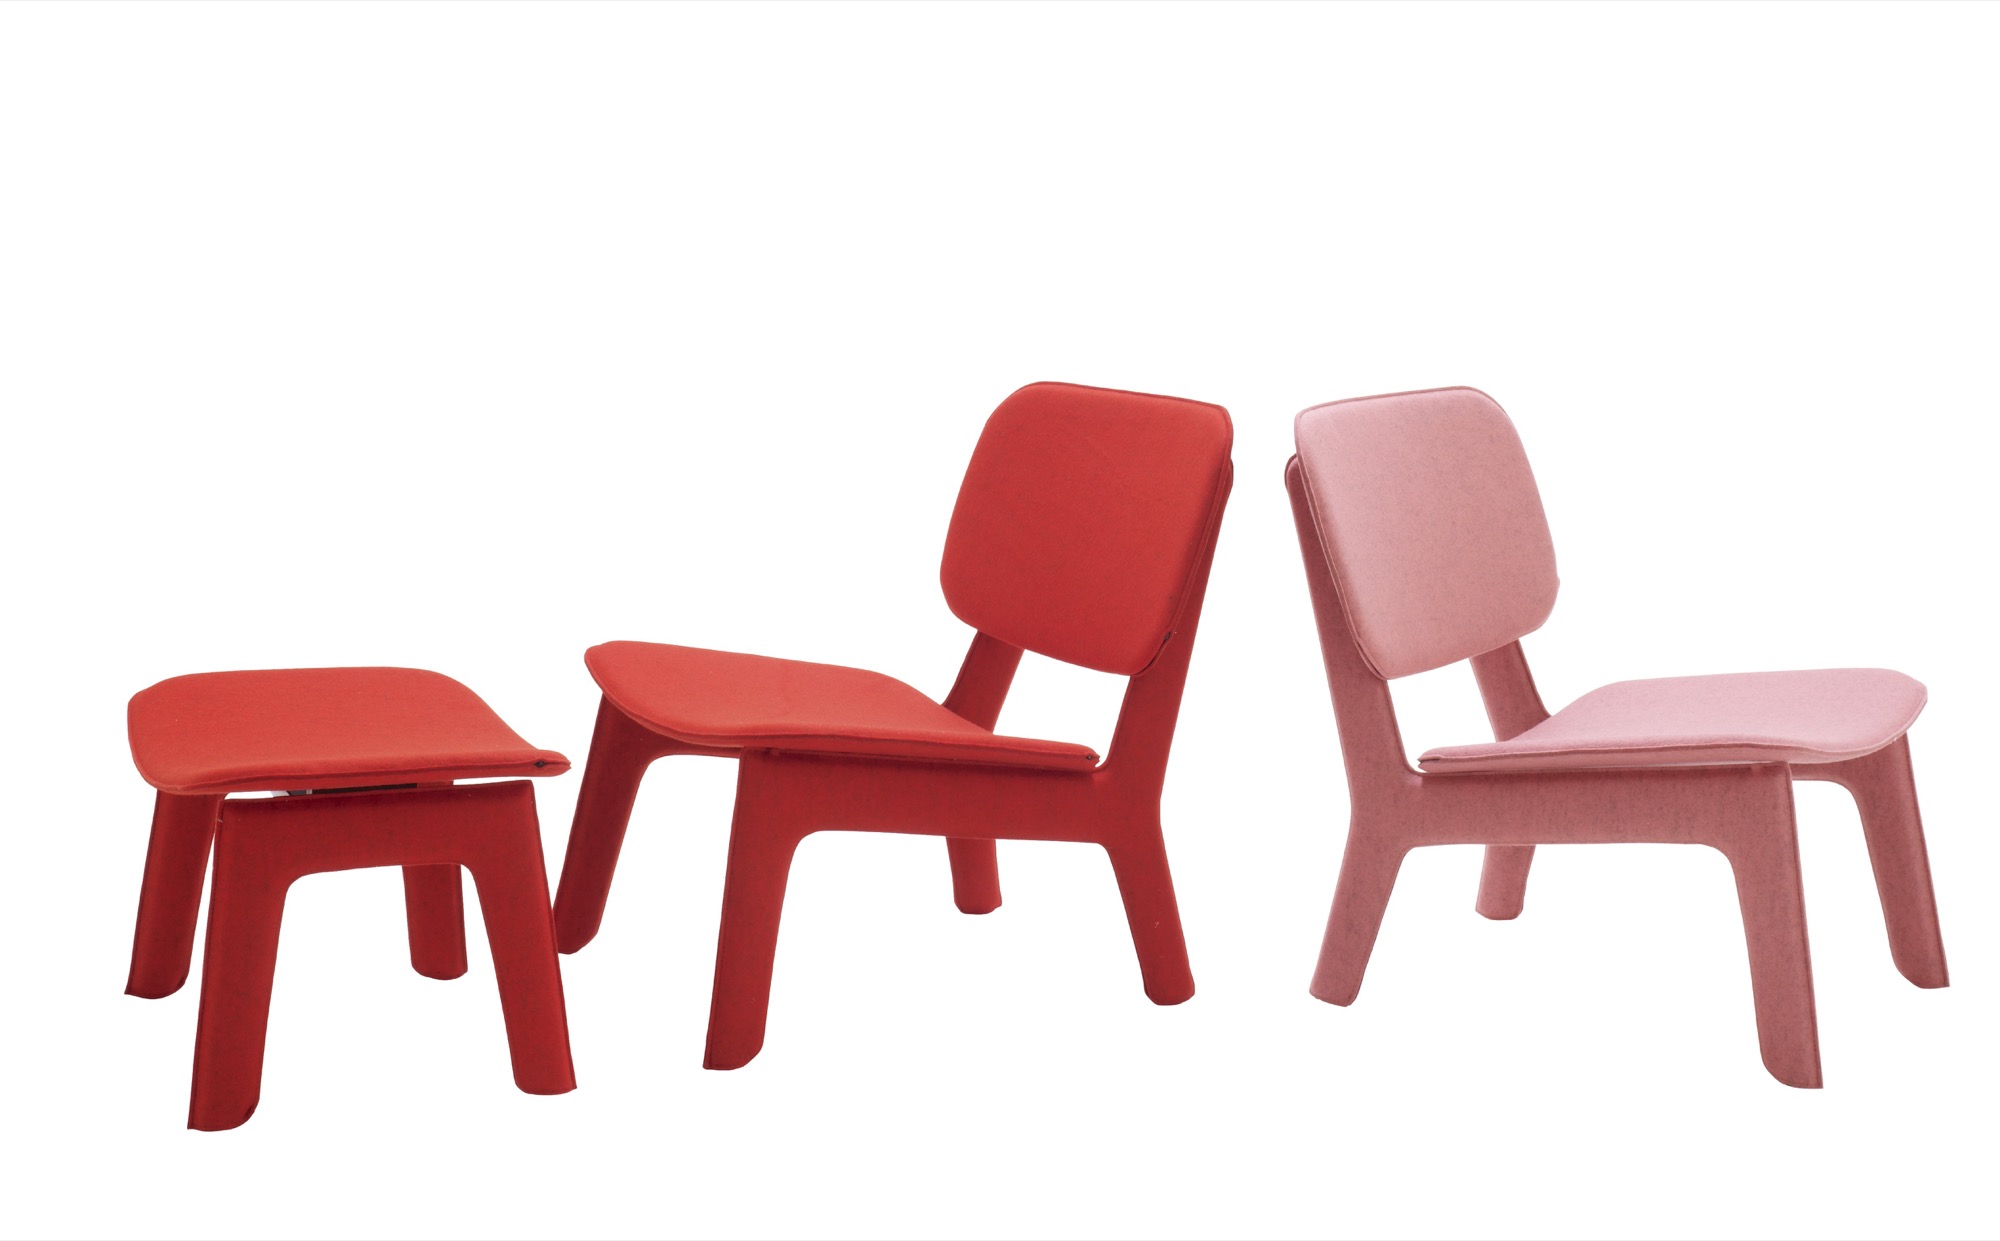 Felt Chairs by Ligne Roset / design by Delo Londo